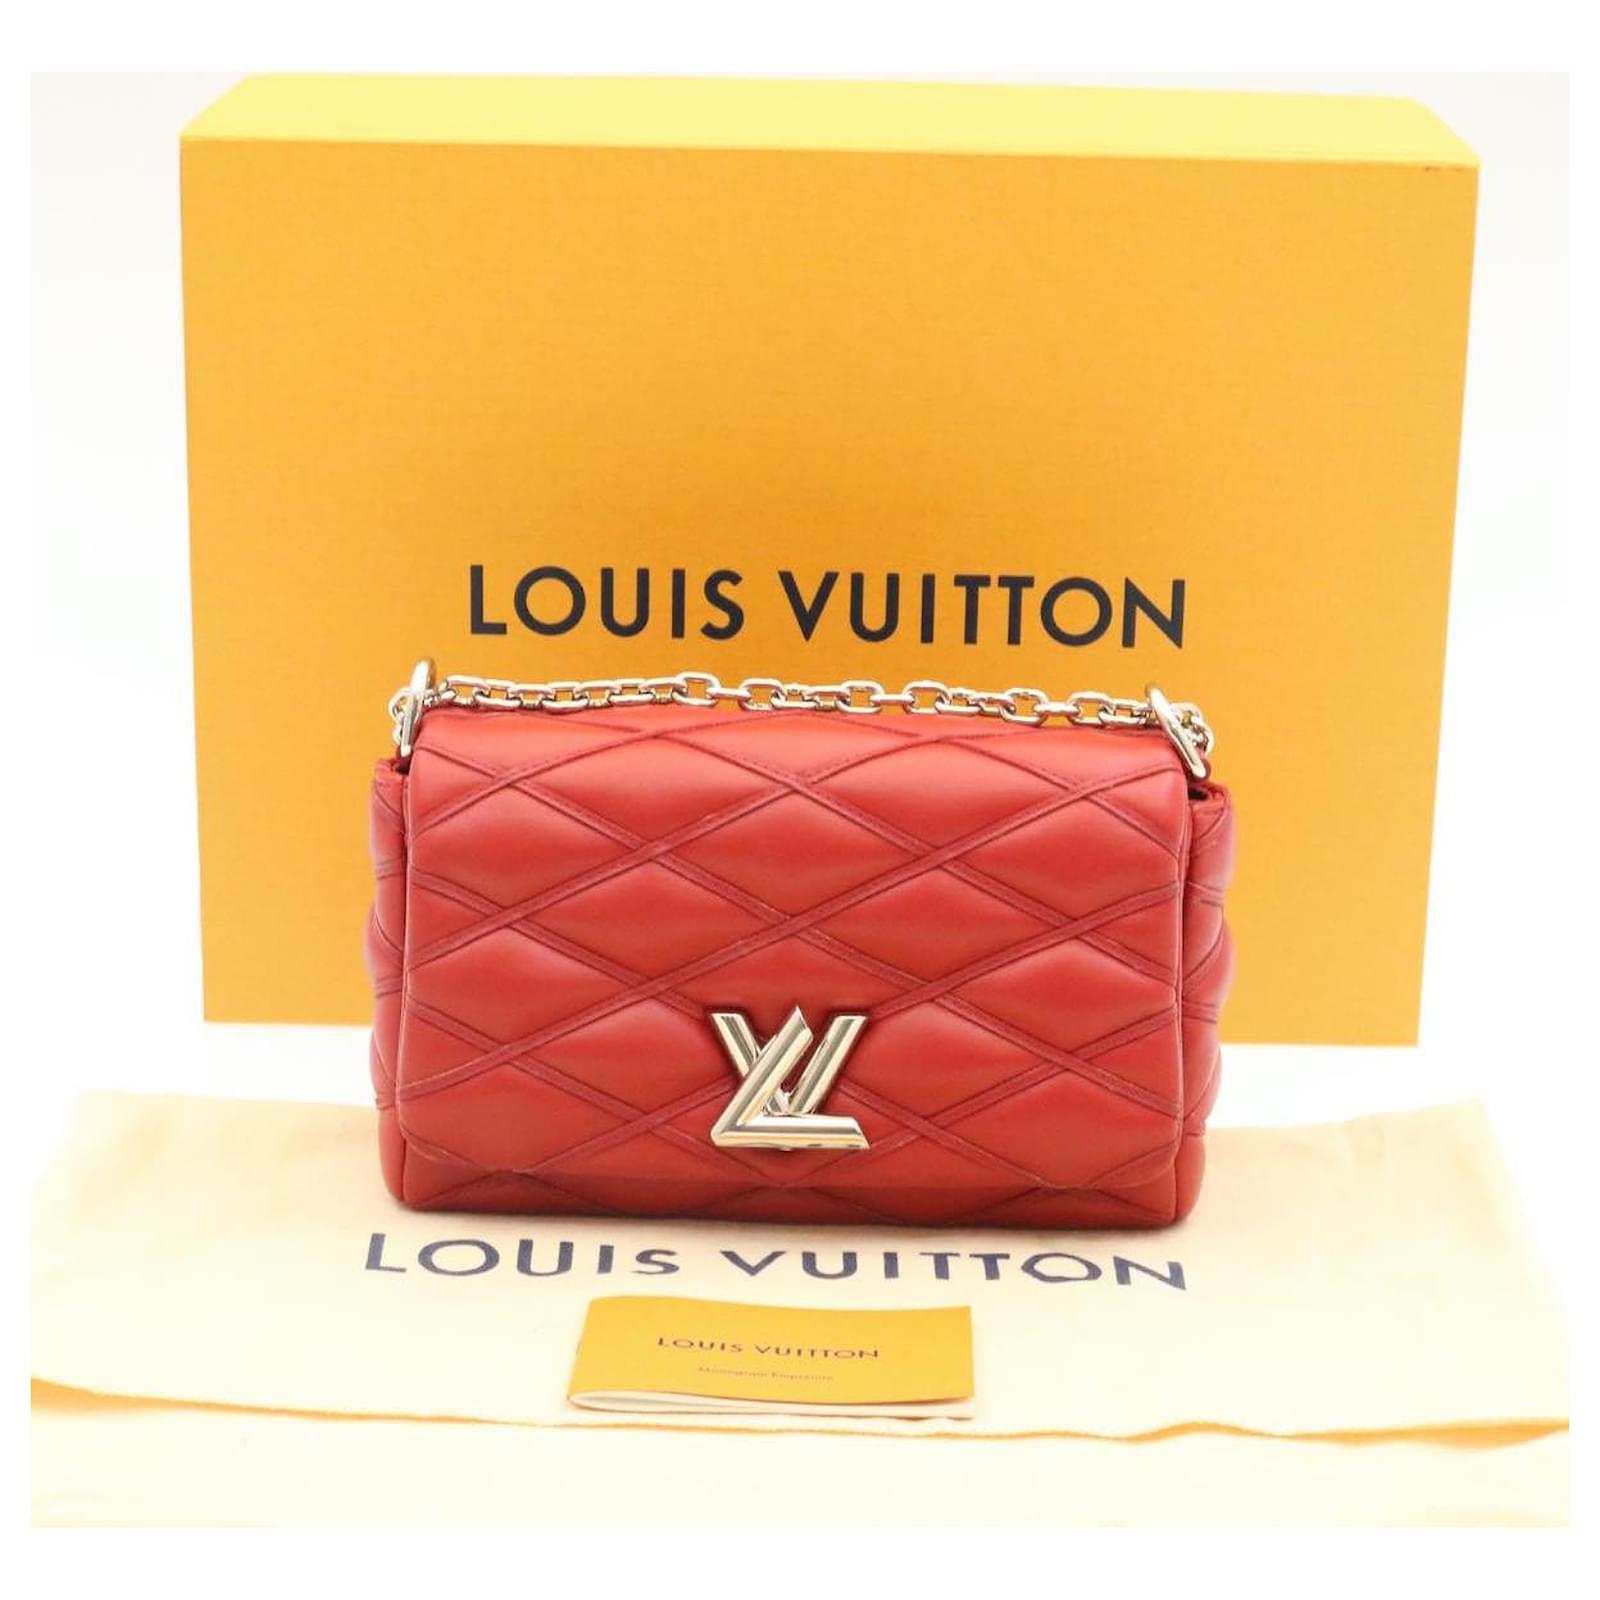 Louis Vuitton Go-14 Mini in Red